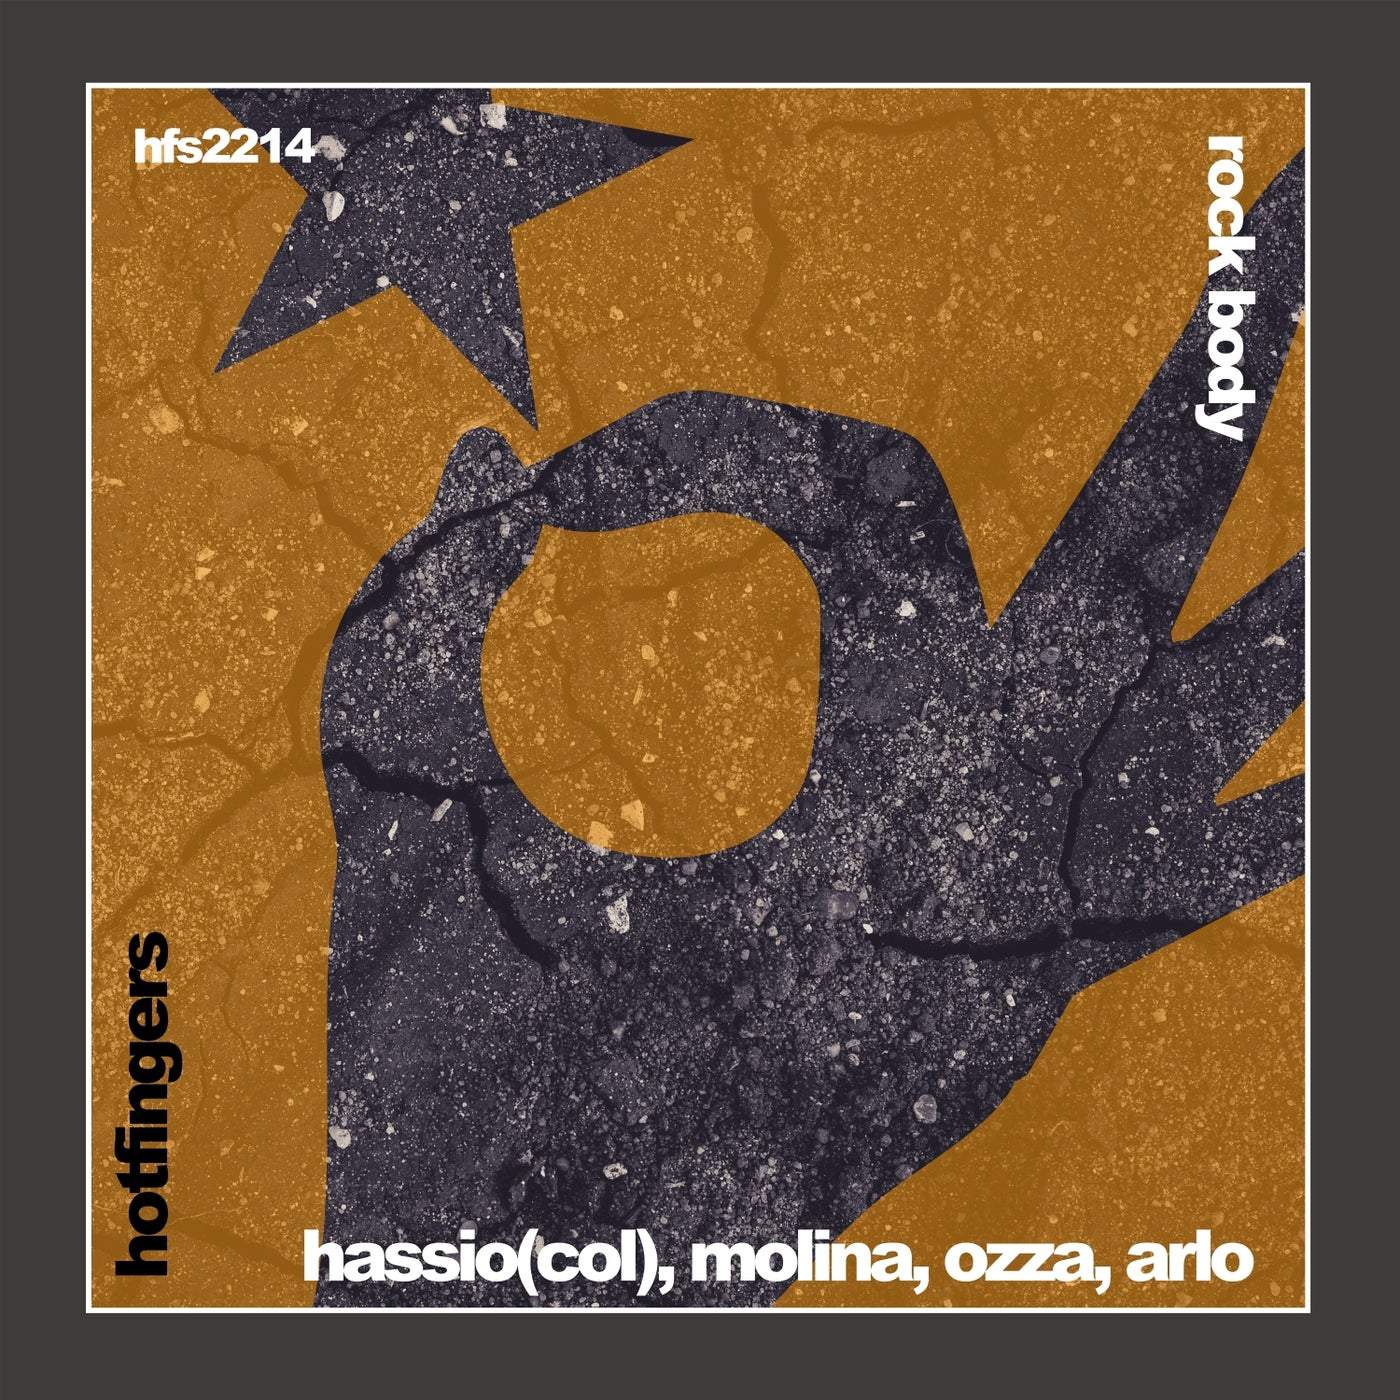 Download Molina, Hassio (COL), Ozza, Arlo - Rock Body [HFS2214] on Electrobuzz